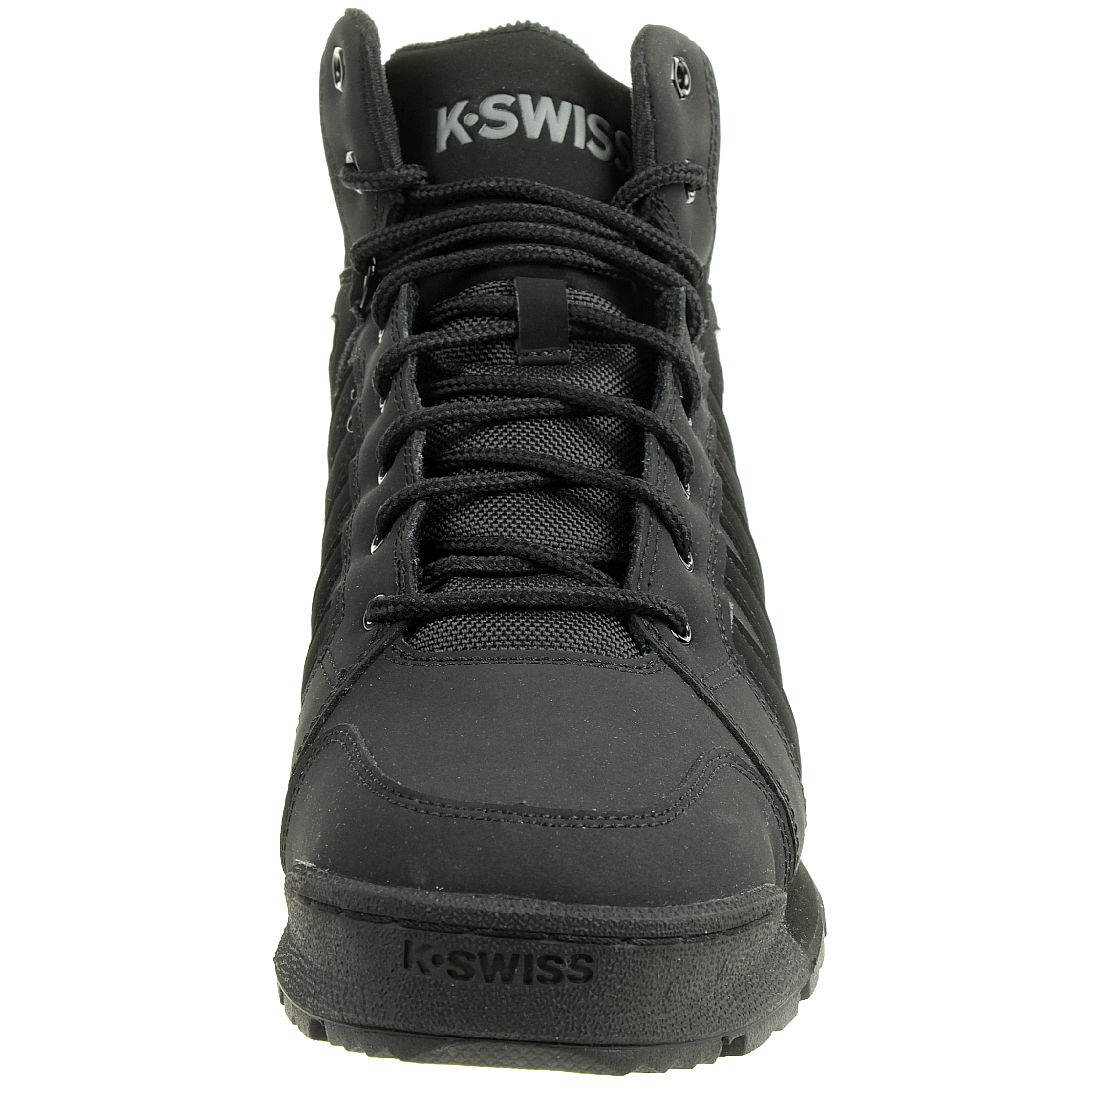 K-Swiss Norfolk SC M Herren Leder Schuhe Boot Outdoor schwarz 05677 022